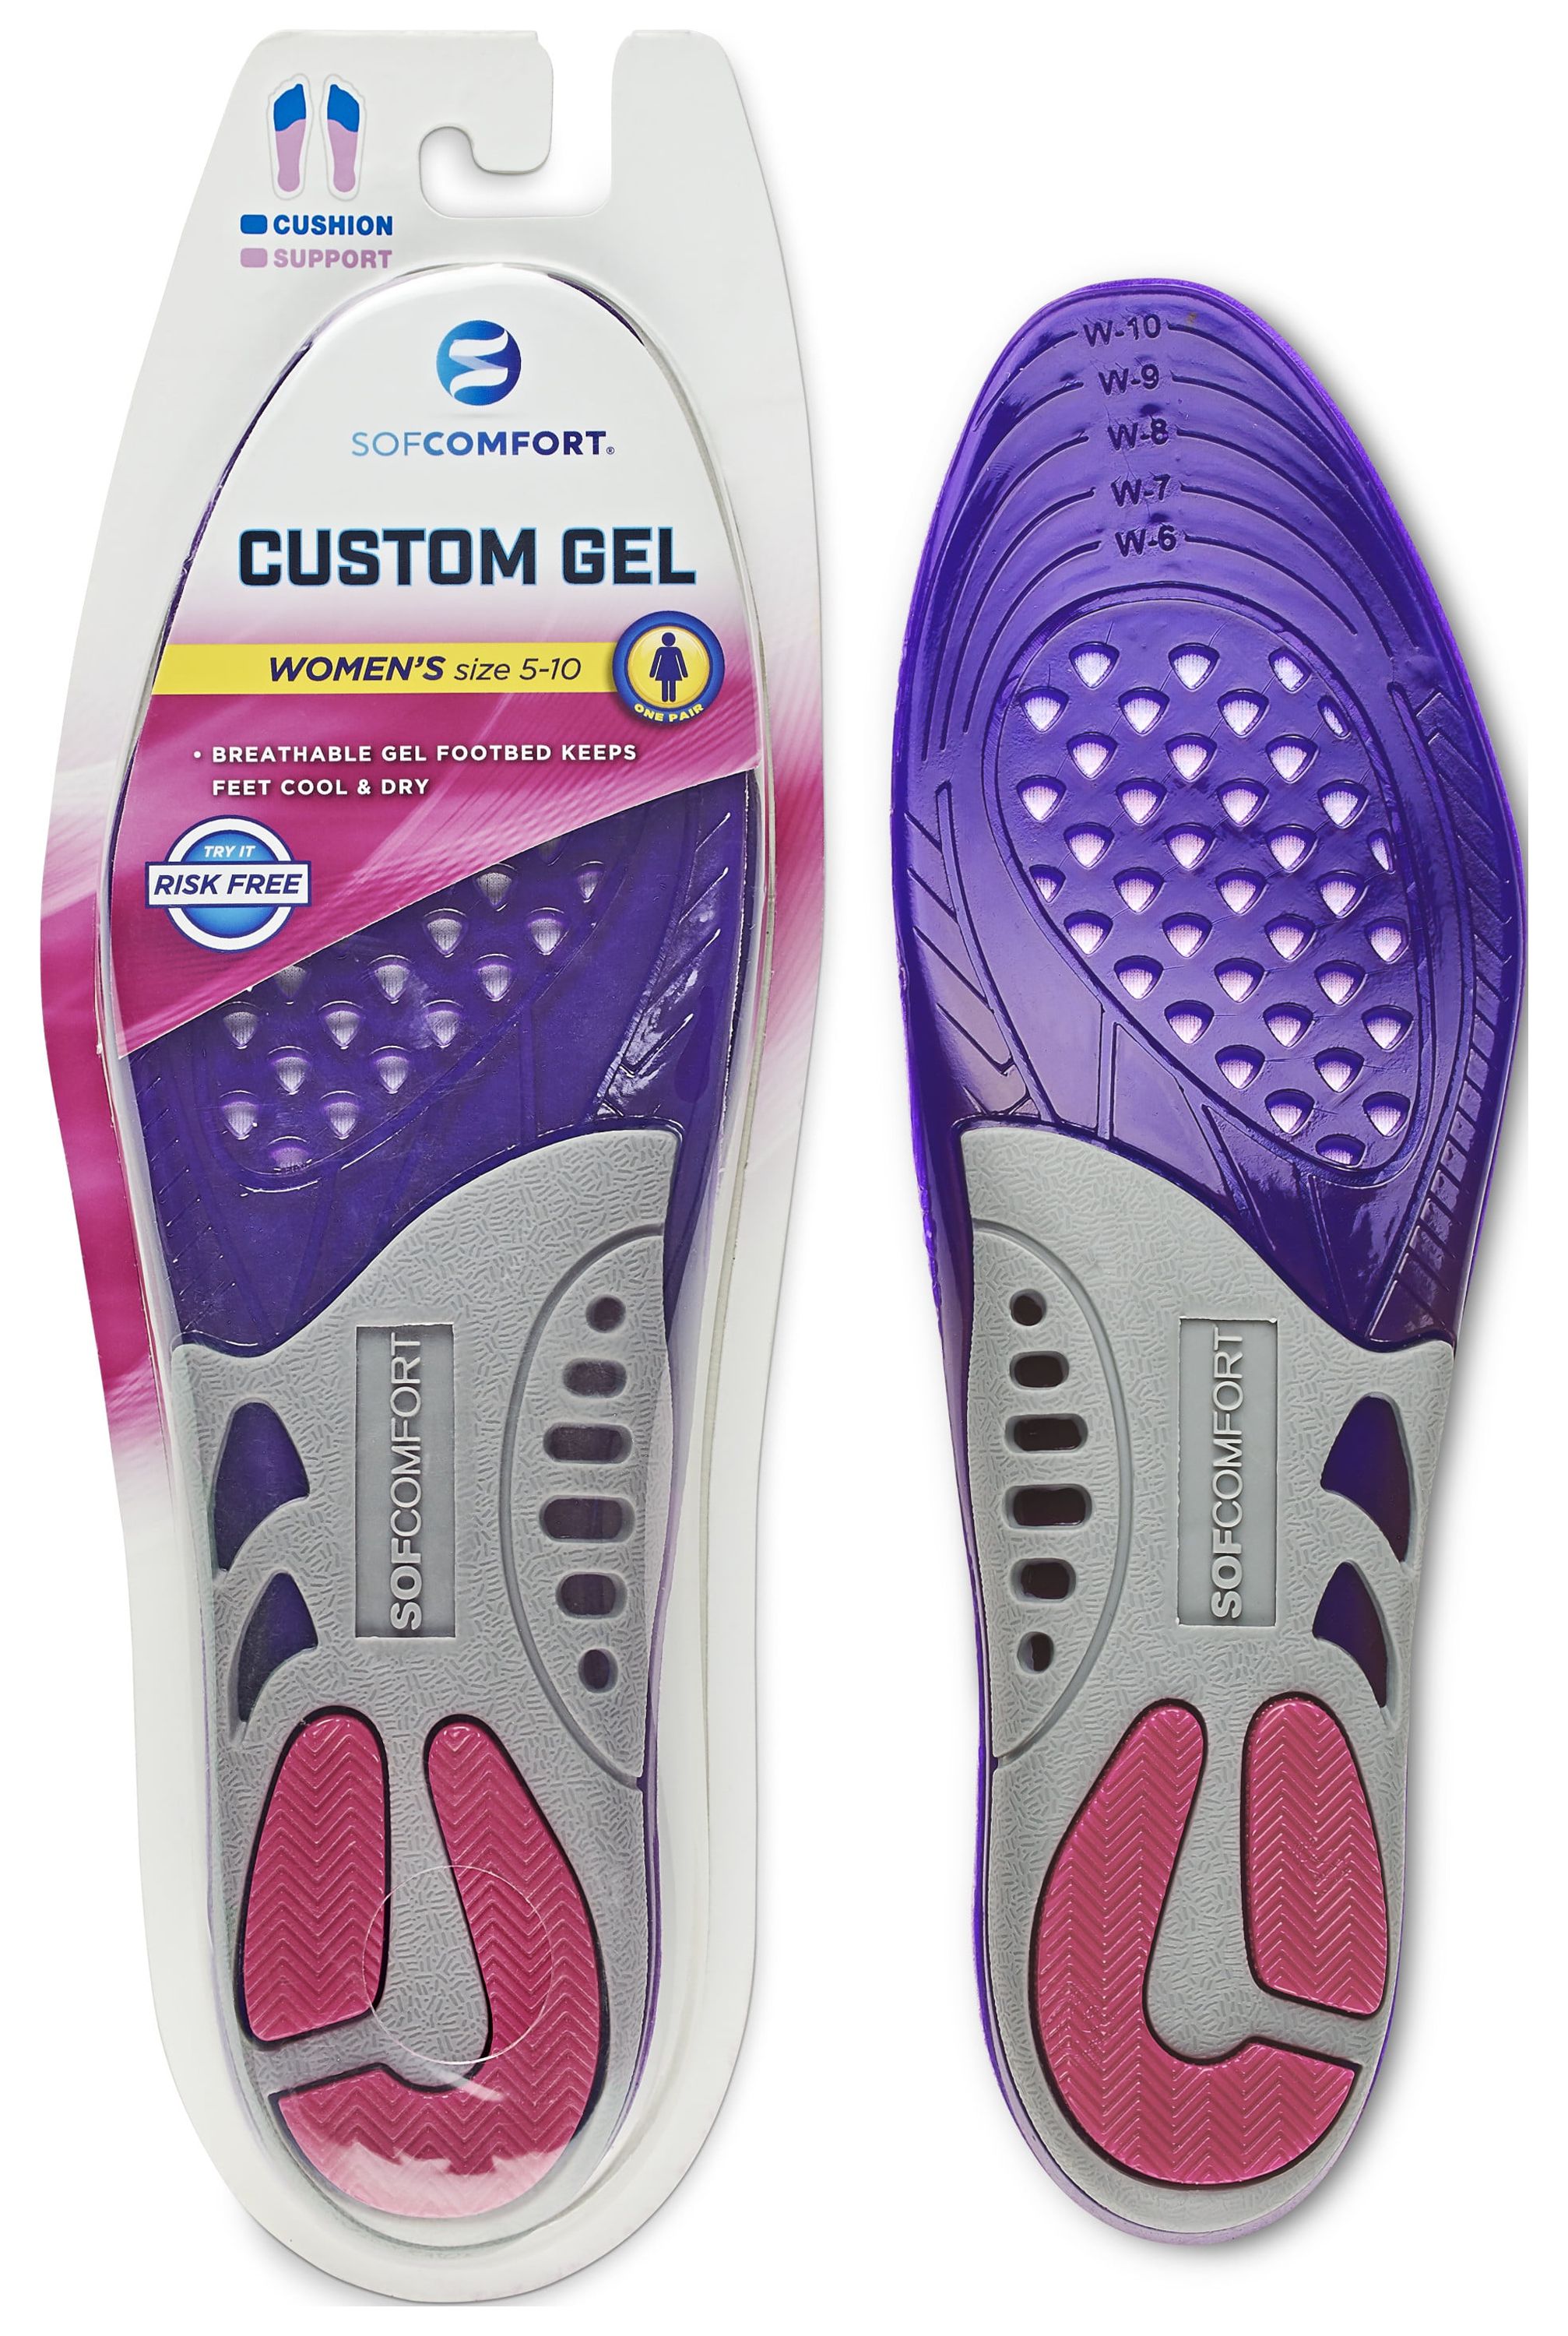 SOFCOMFORT Custom Gel Insole Purple One Size - image 1 of 9